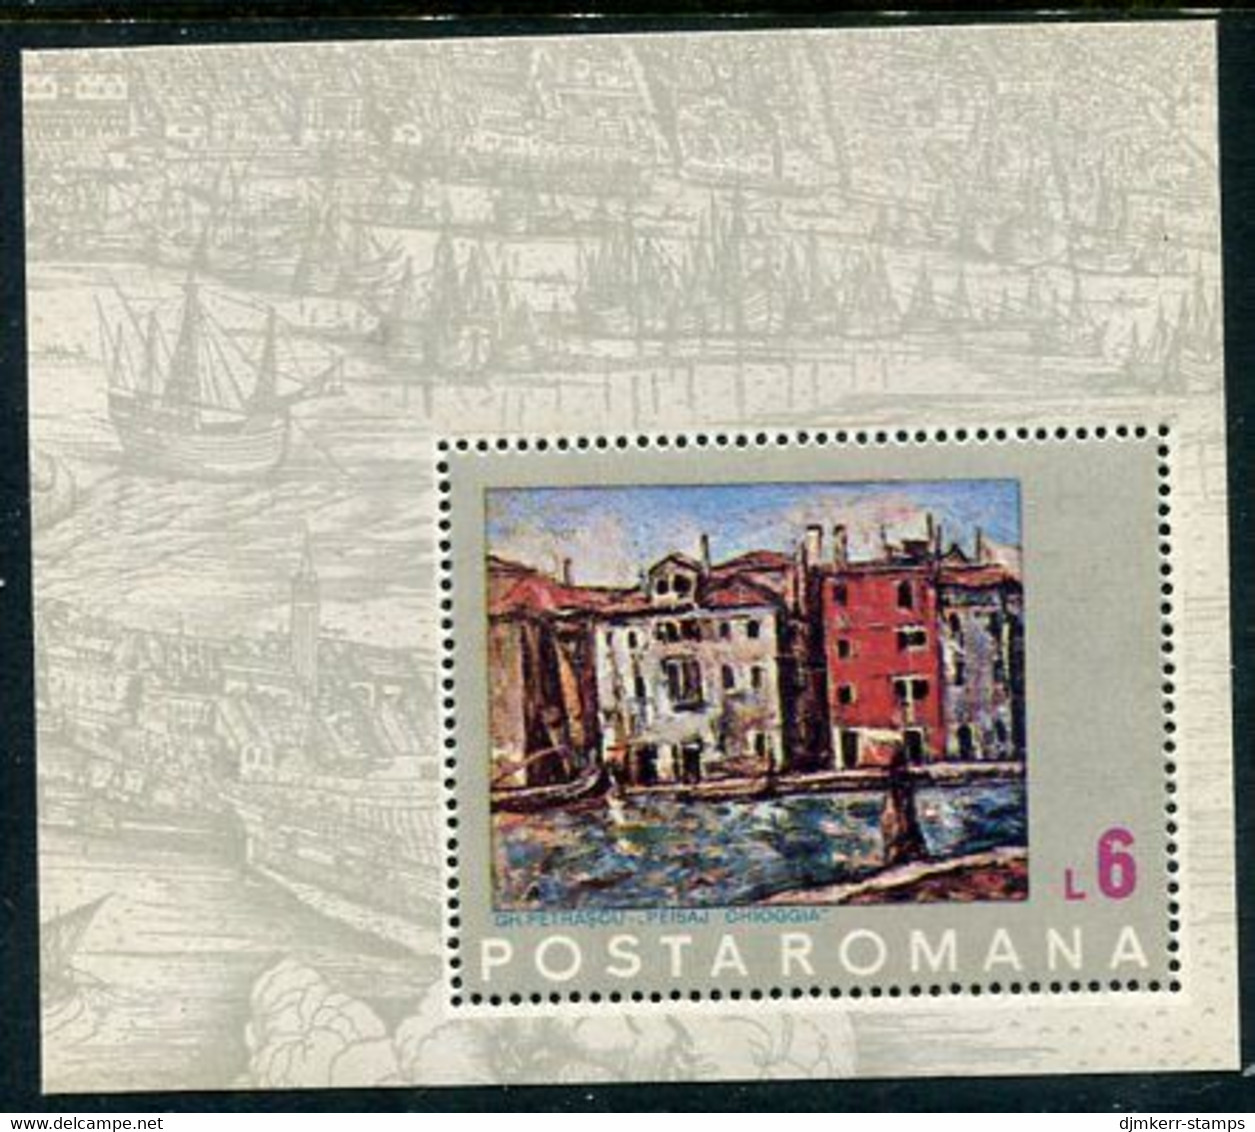 ROMANIA 1972 UNESCO Save Venice Block MNH / **.  Michel Block 99 - Blocks & Sheetlets